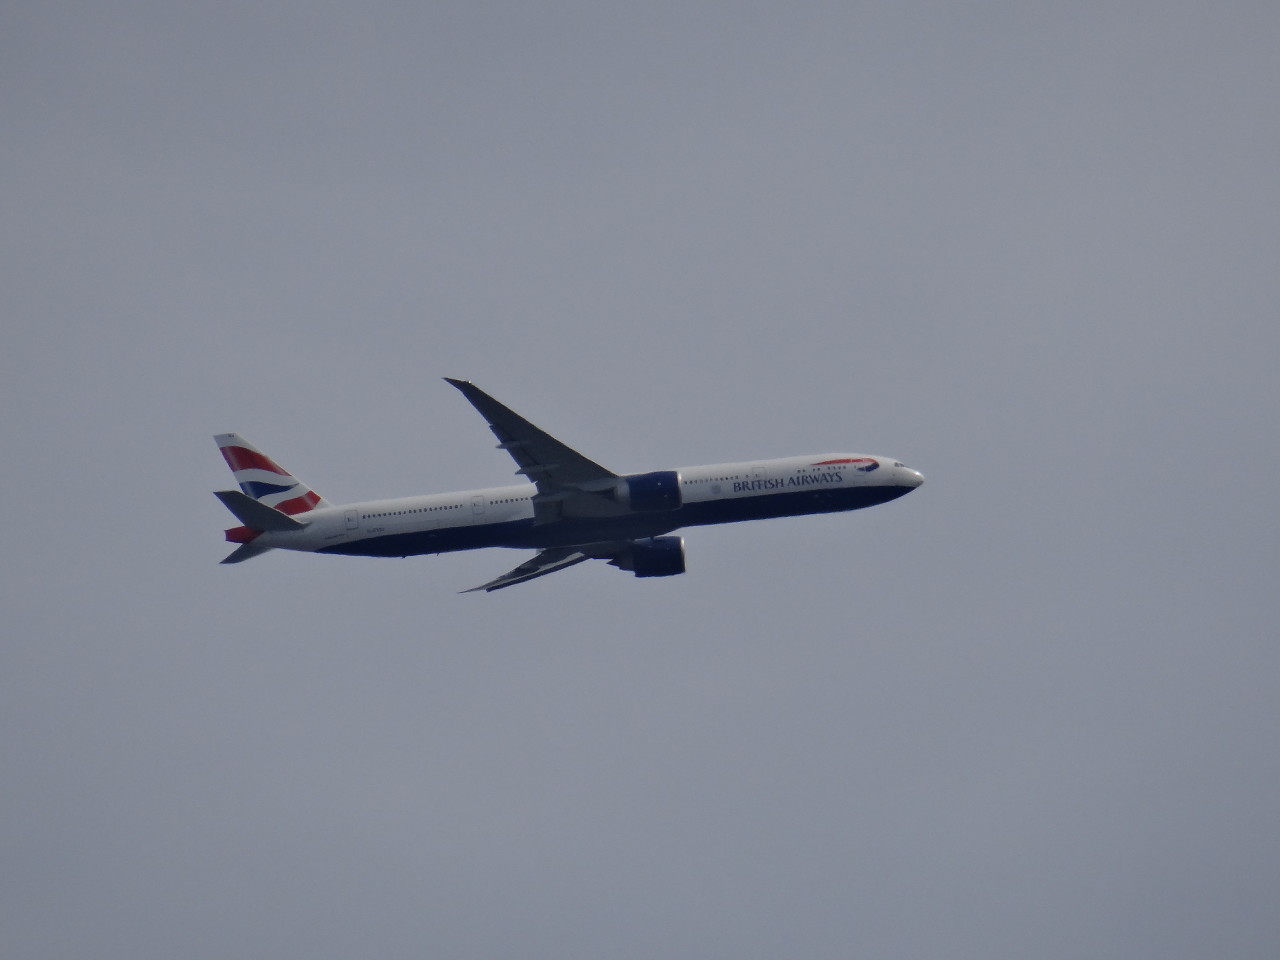 British Airways plane flying over London